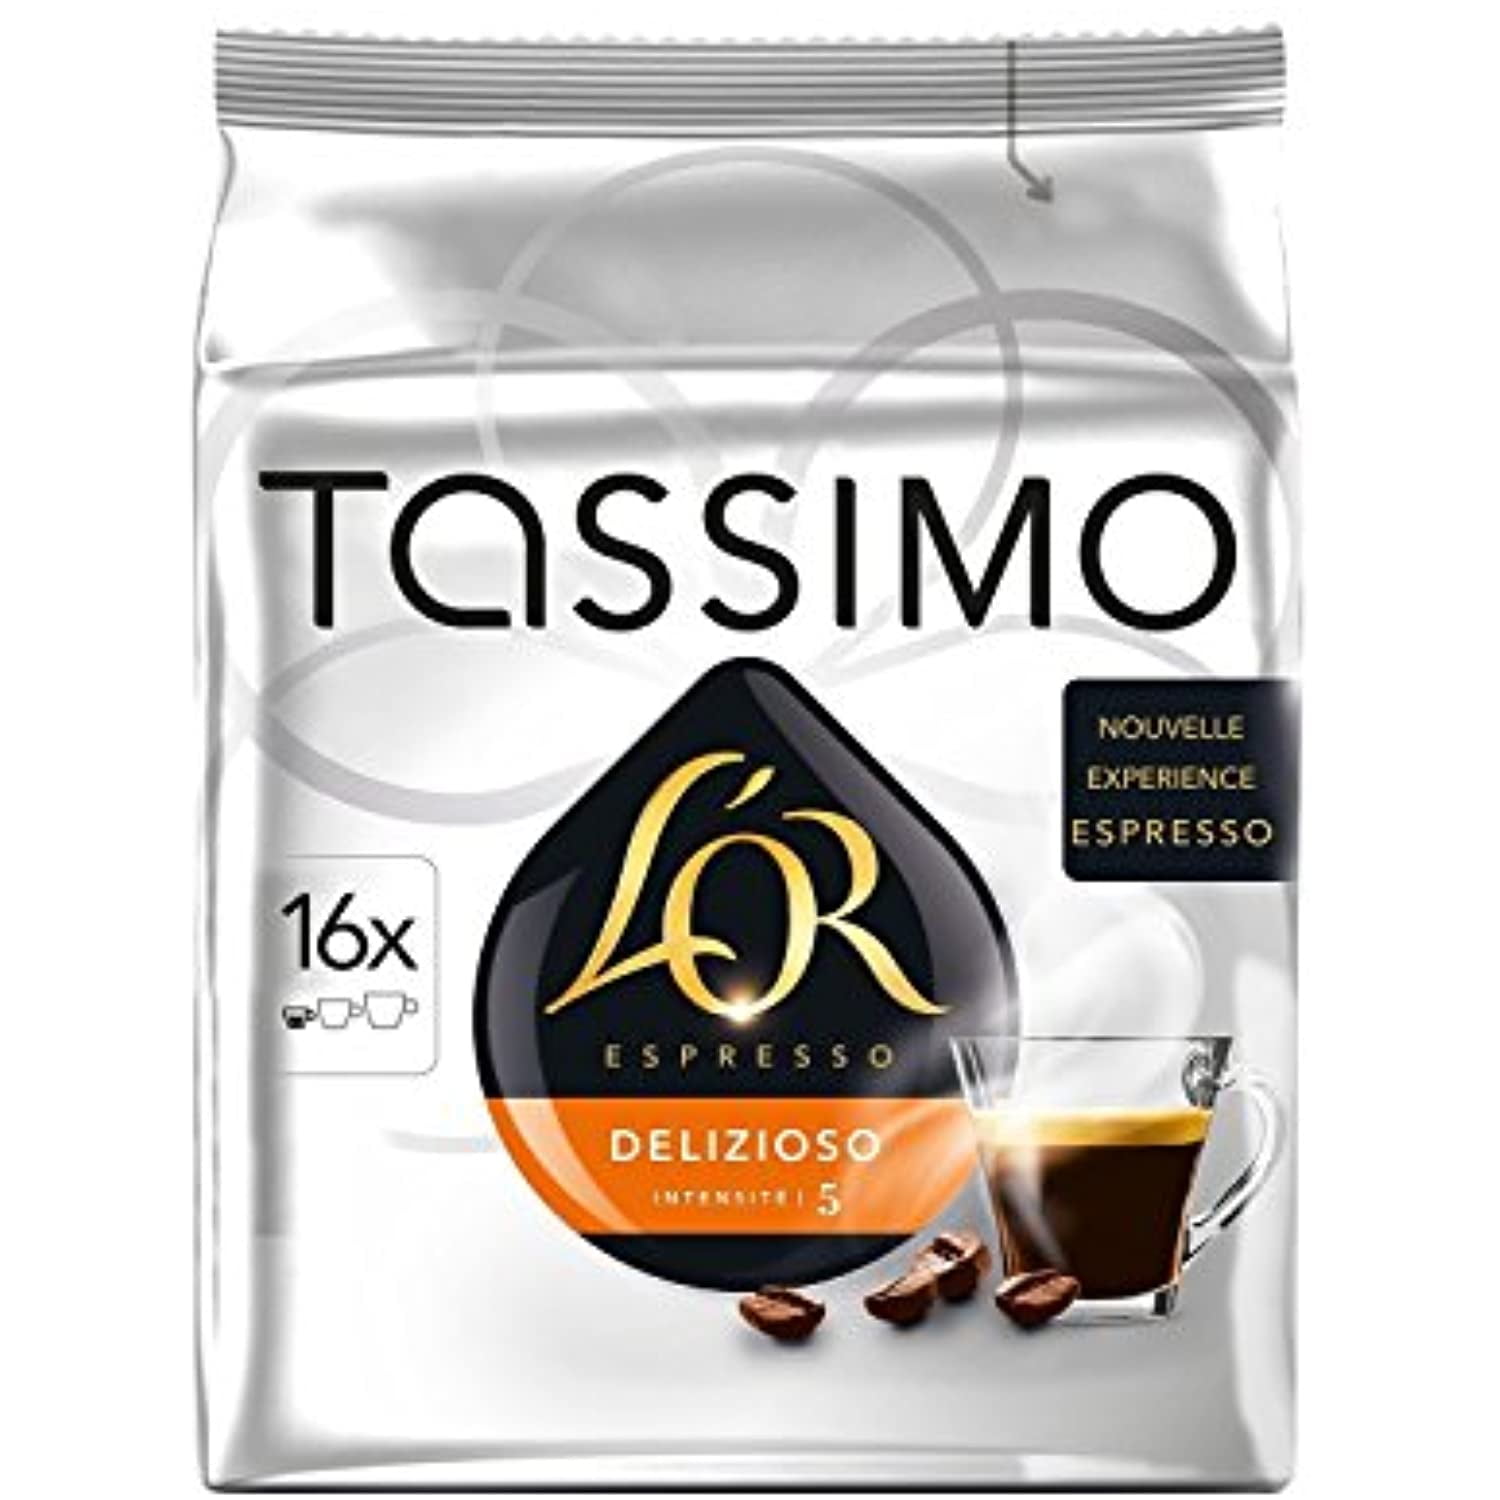 Tassimo Coffee Pods Jacobs Cafe Au Lait Coffee 16 32 48 64 80 (T-Discs)